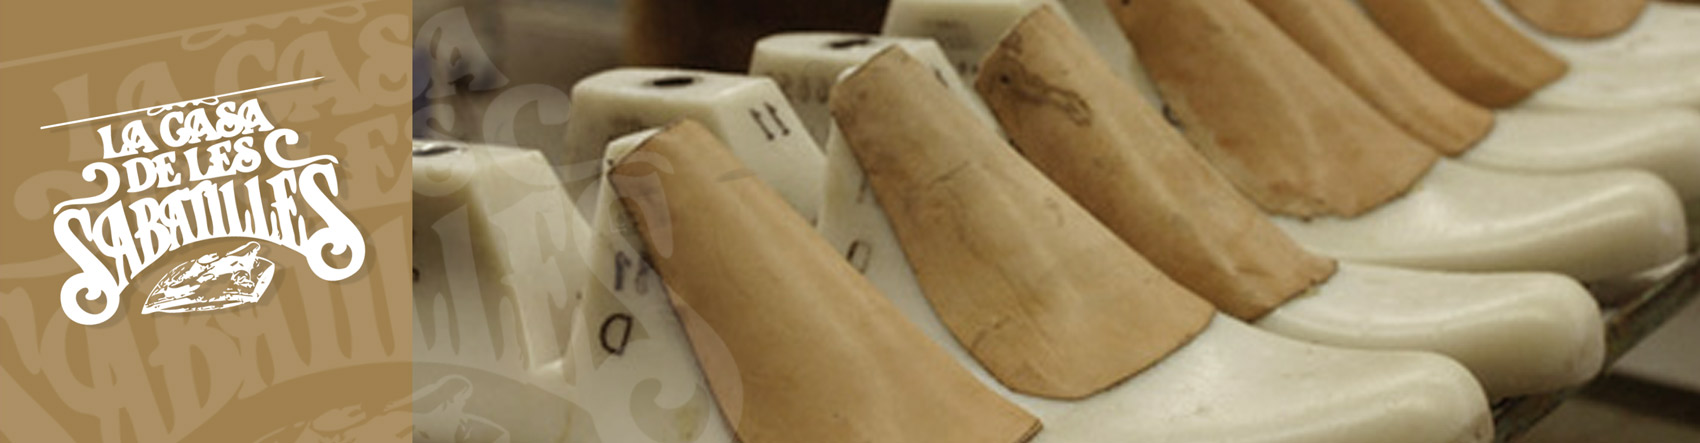 La casa de las zapatillas - Venta de zapatillas Nordikas, Calzados Montané, Calzados Festival, zapatillas esparto, hechas a mano en España. Outlet